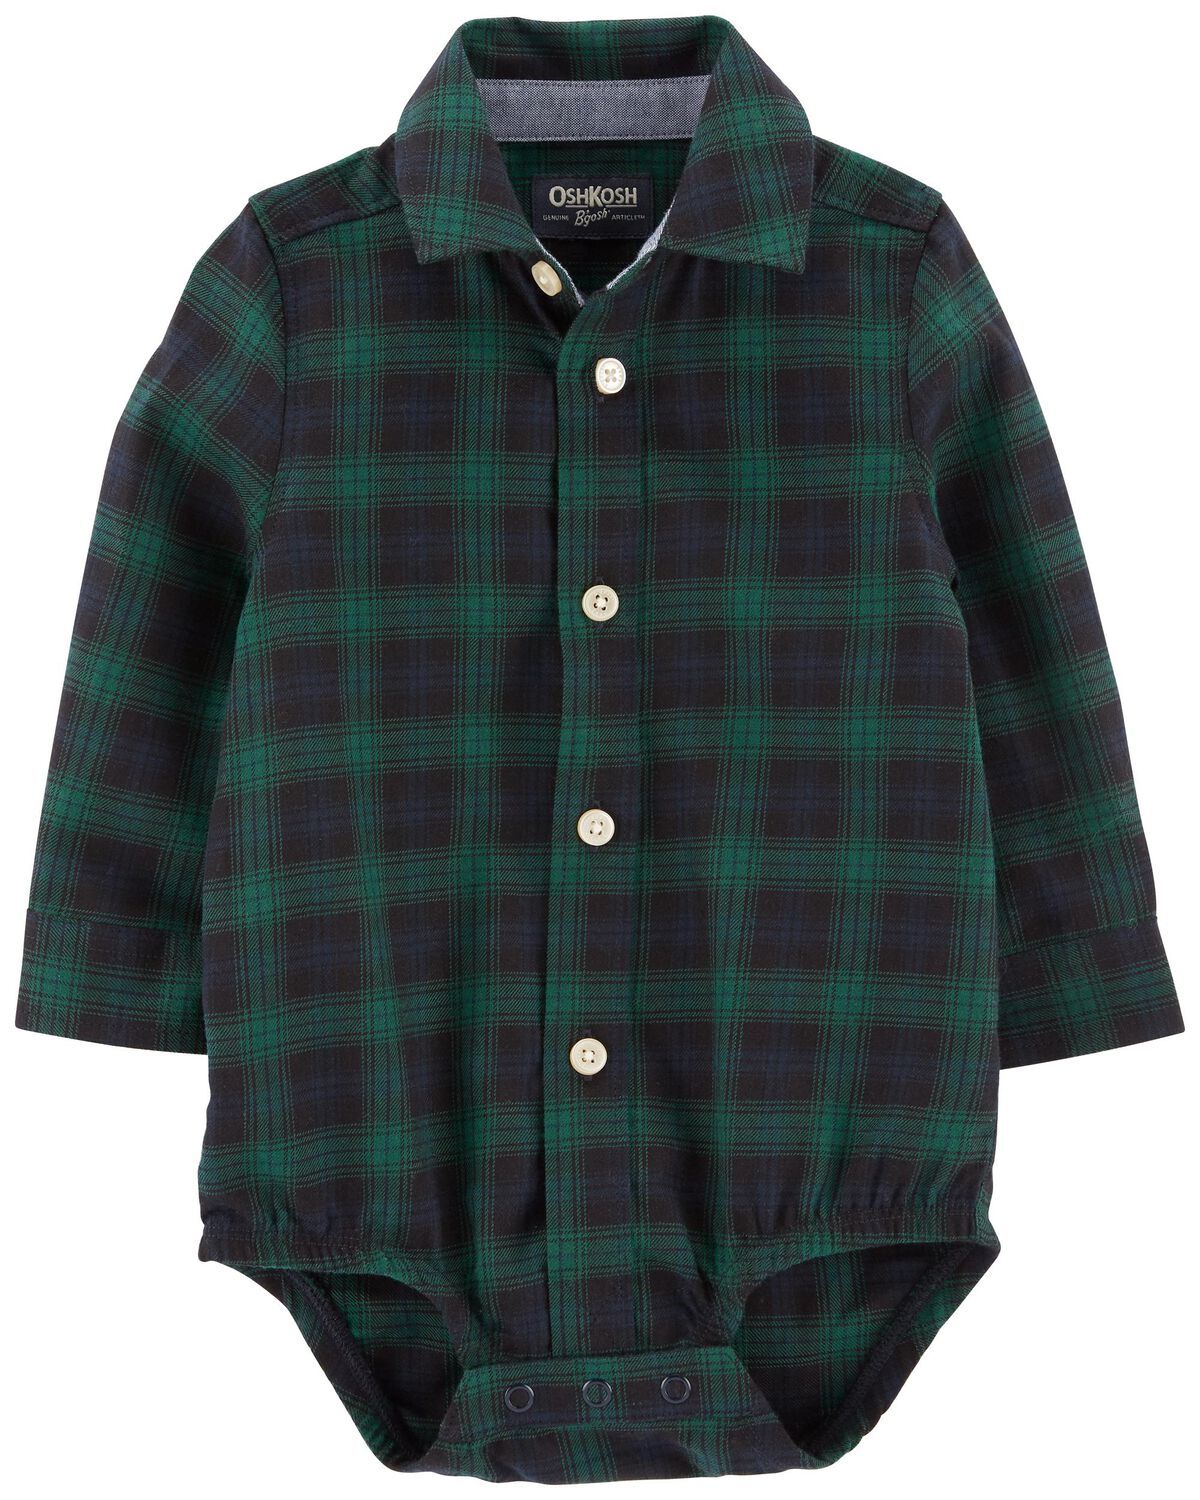 Green Plaid Baby Family Matching: Soft Twill Button-Front Bodysuit | oshkosh.com | OshKosh B'gosh